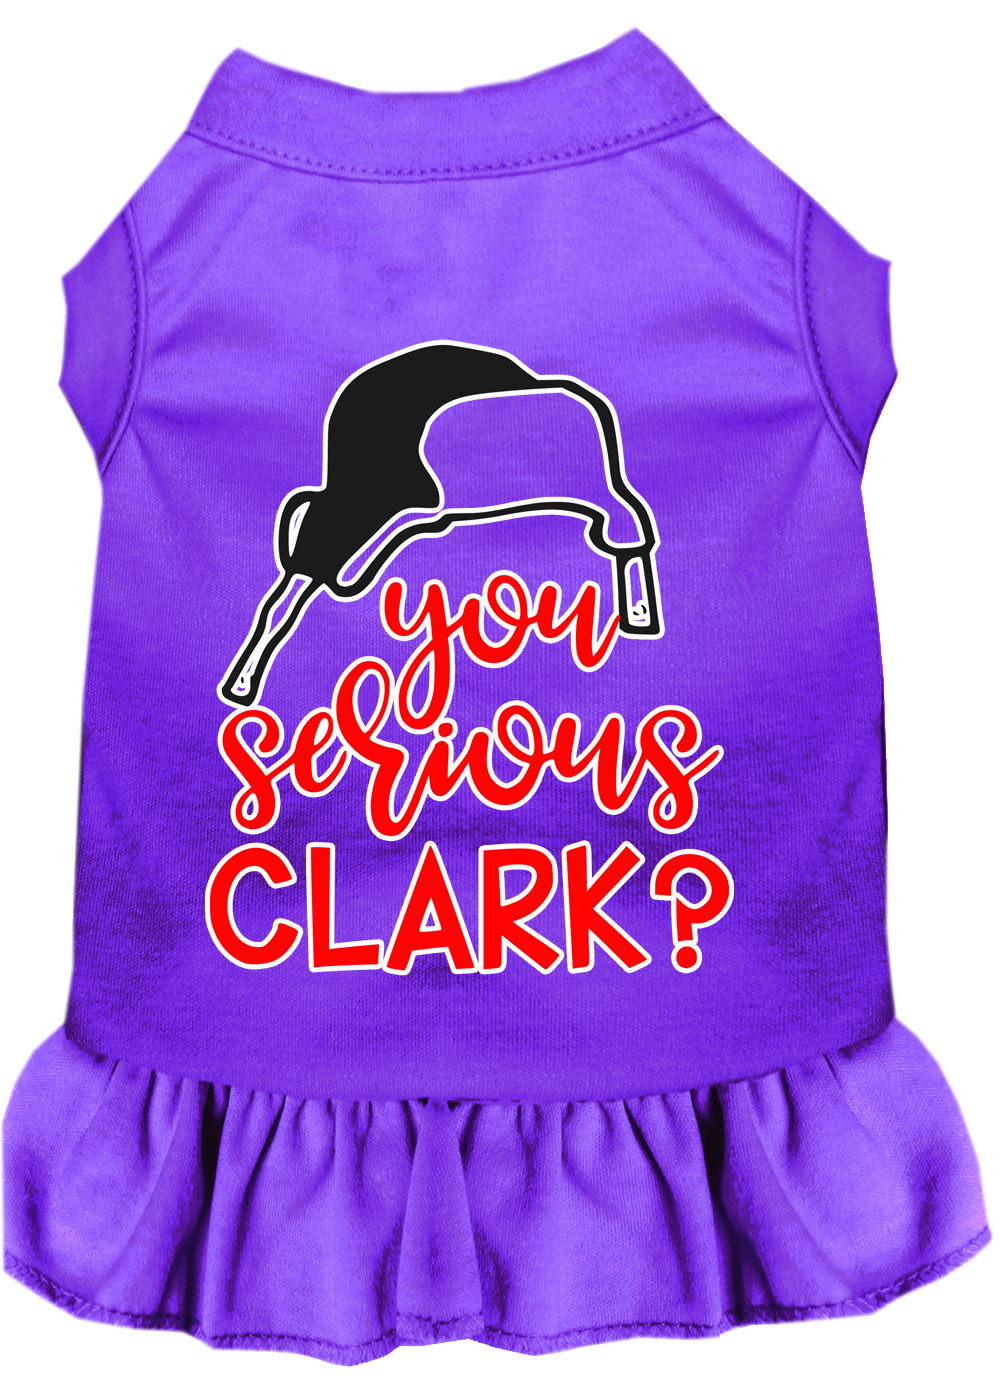 You Serious Clark? Screen Print Dog Dress Purple XS